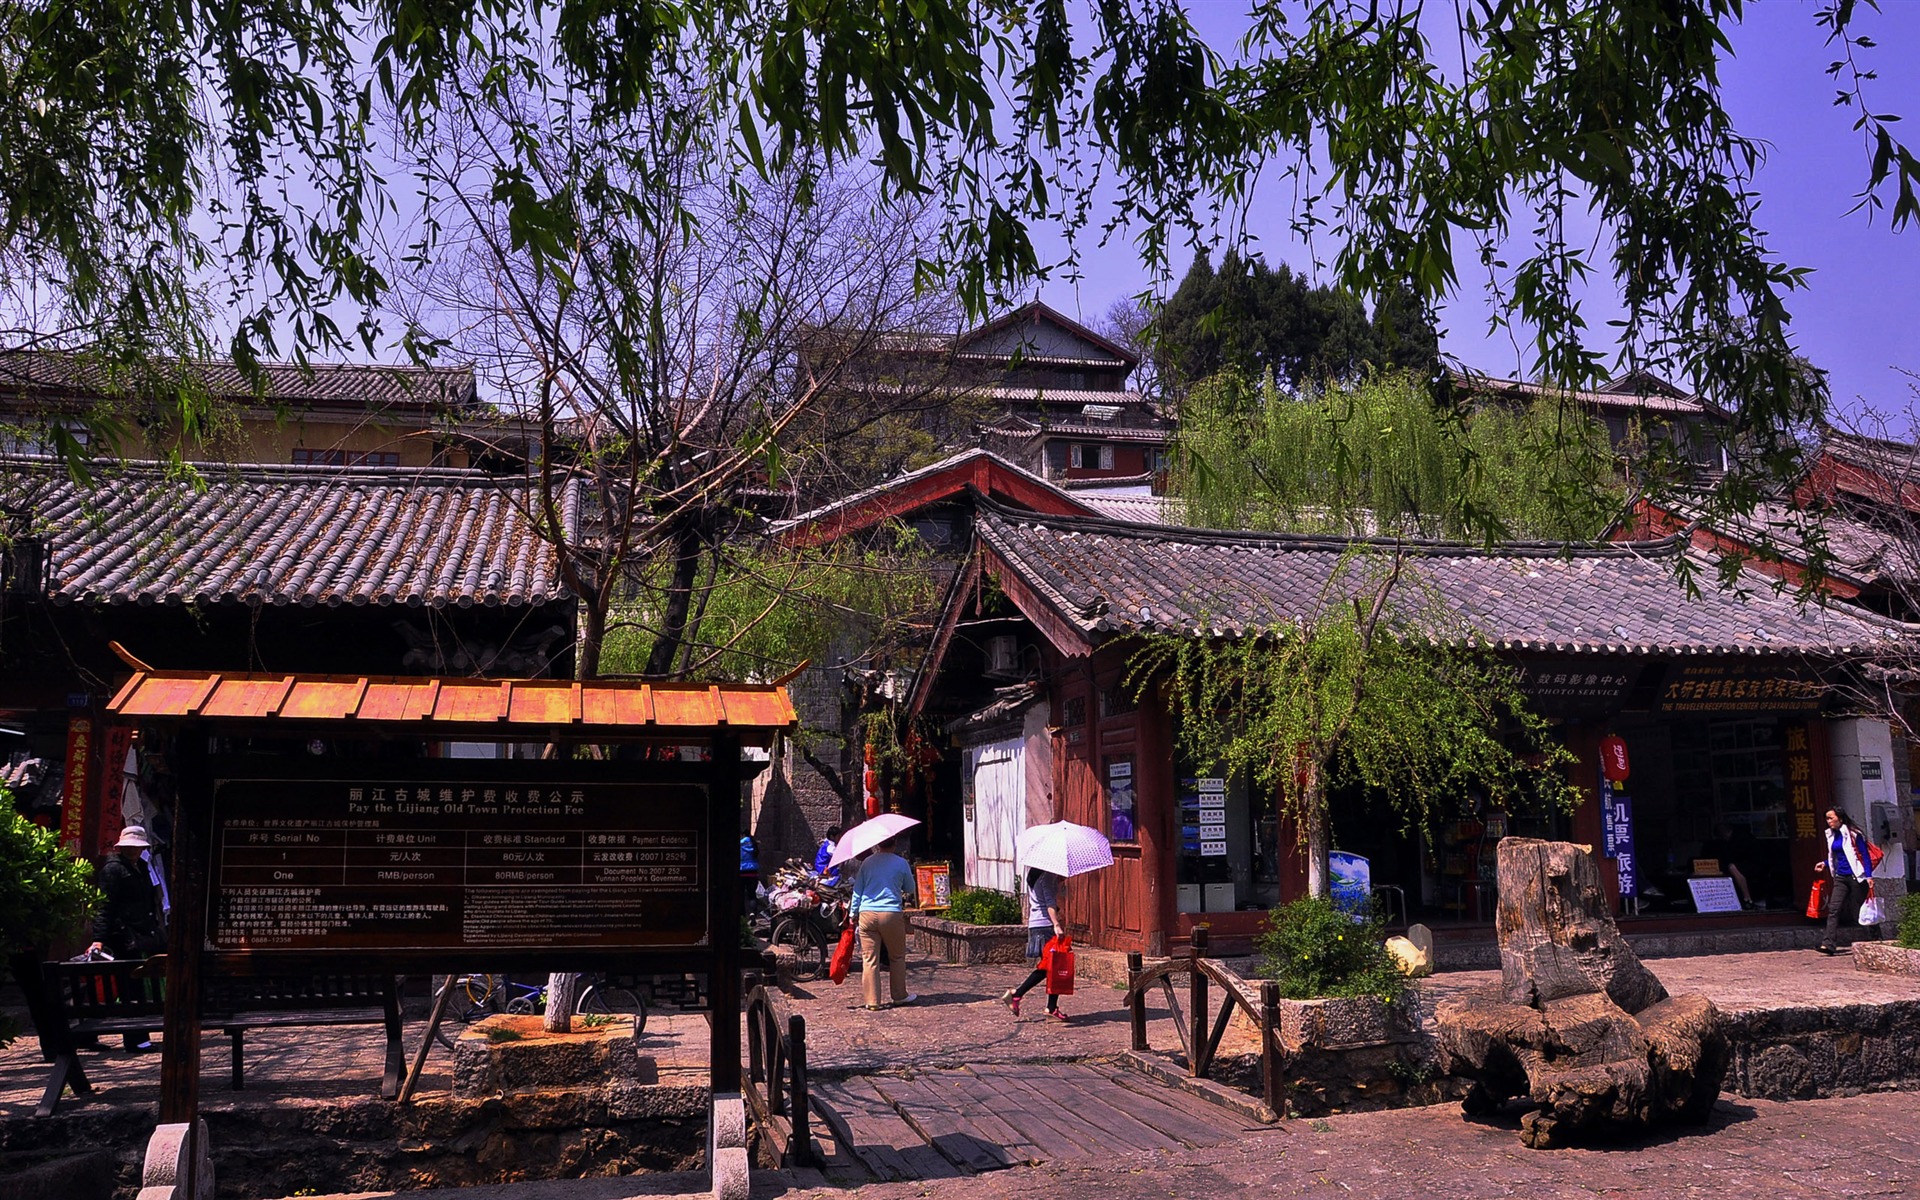 Lijiang ancient town atmosphere (2) (old Hong OK works) #26 - 1920x1200